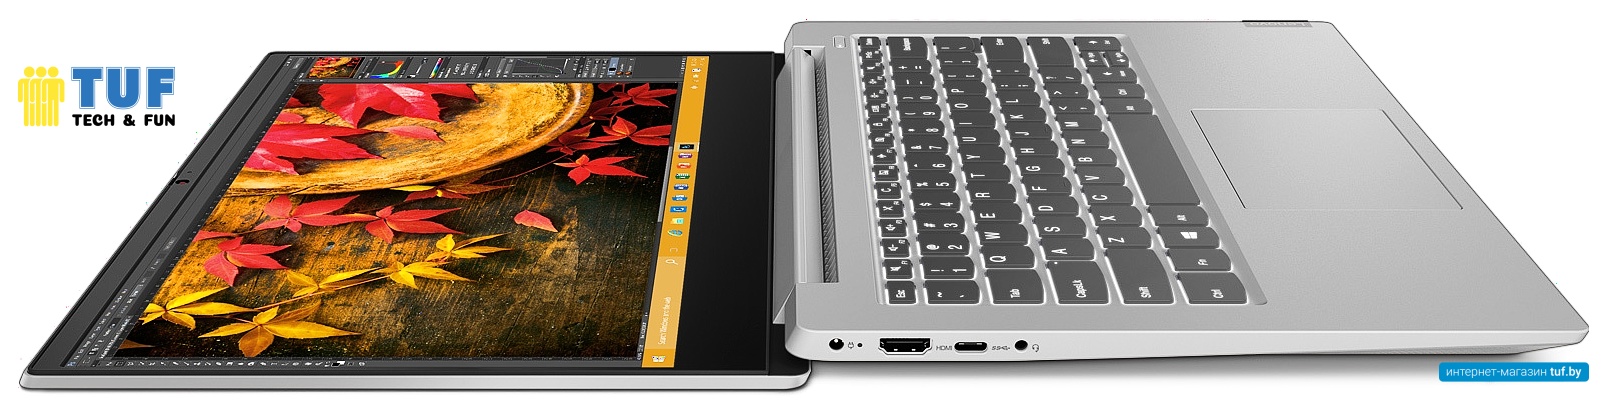 Ноутбук Lenovo IdeaPad S340-14IIL 81VV008JRK